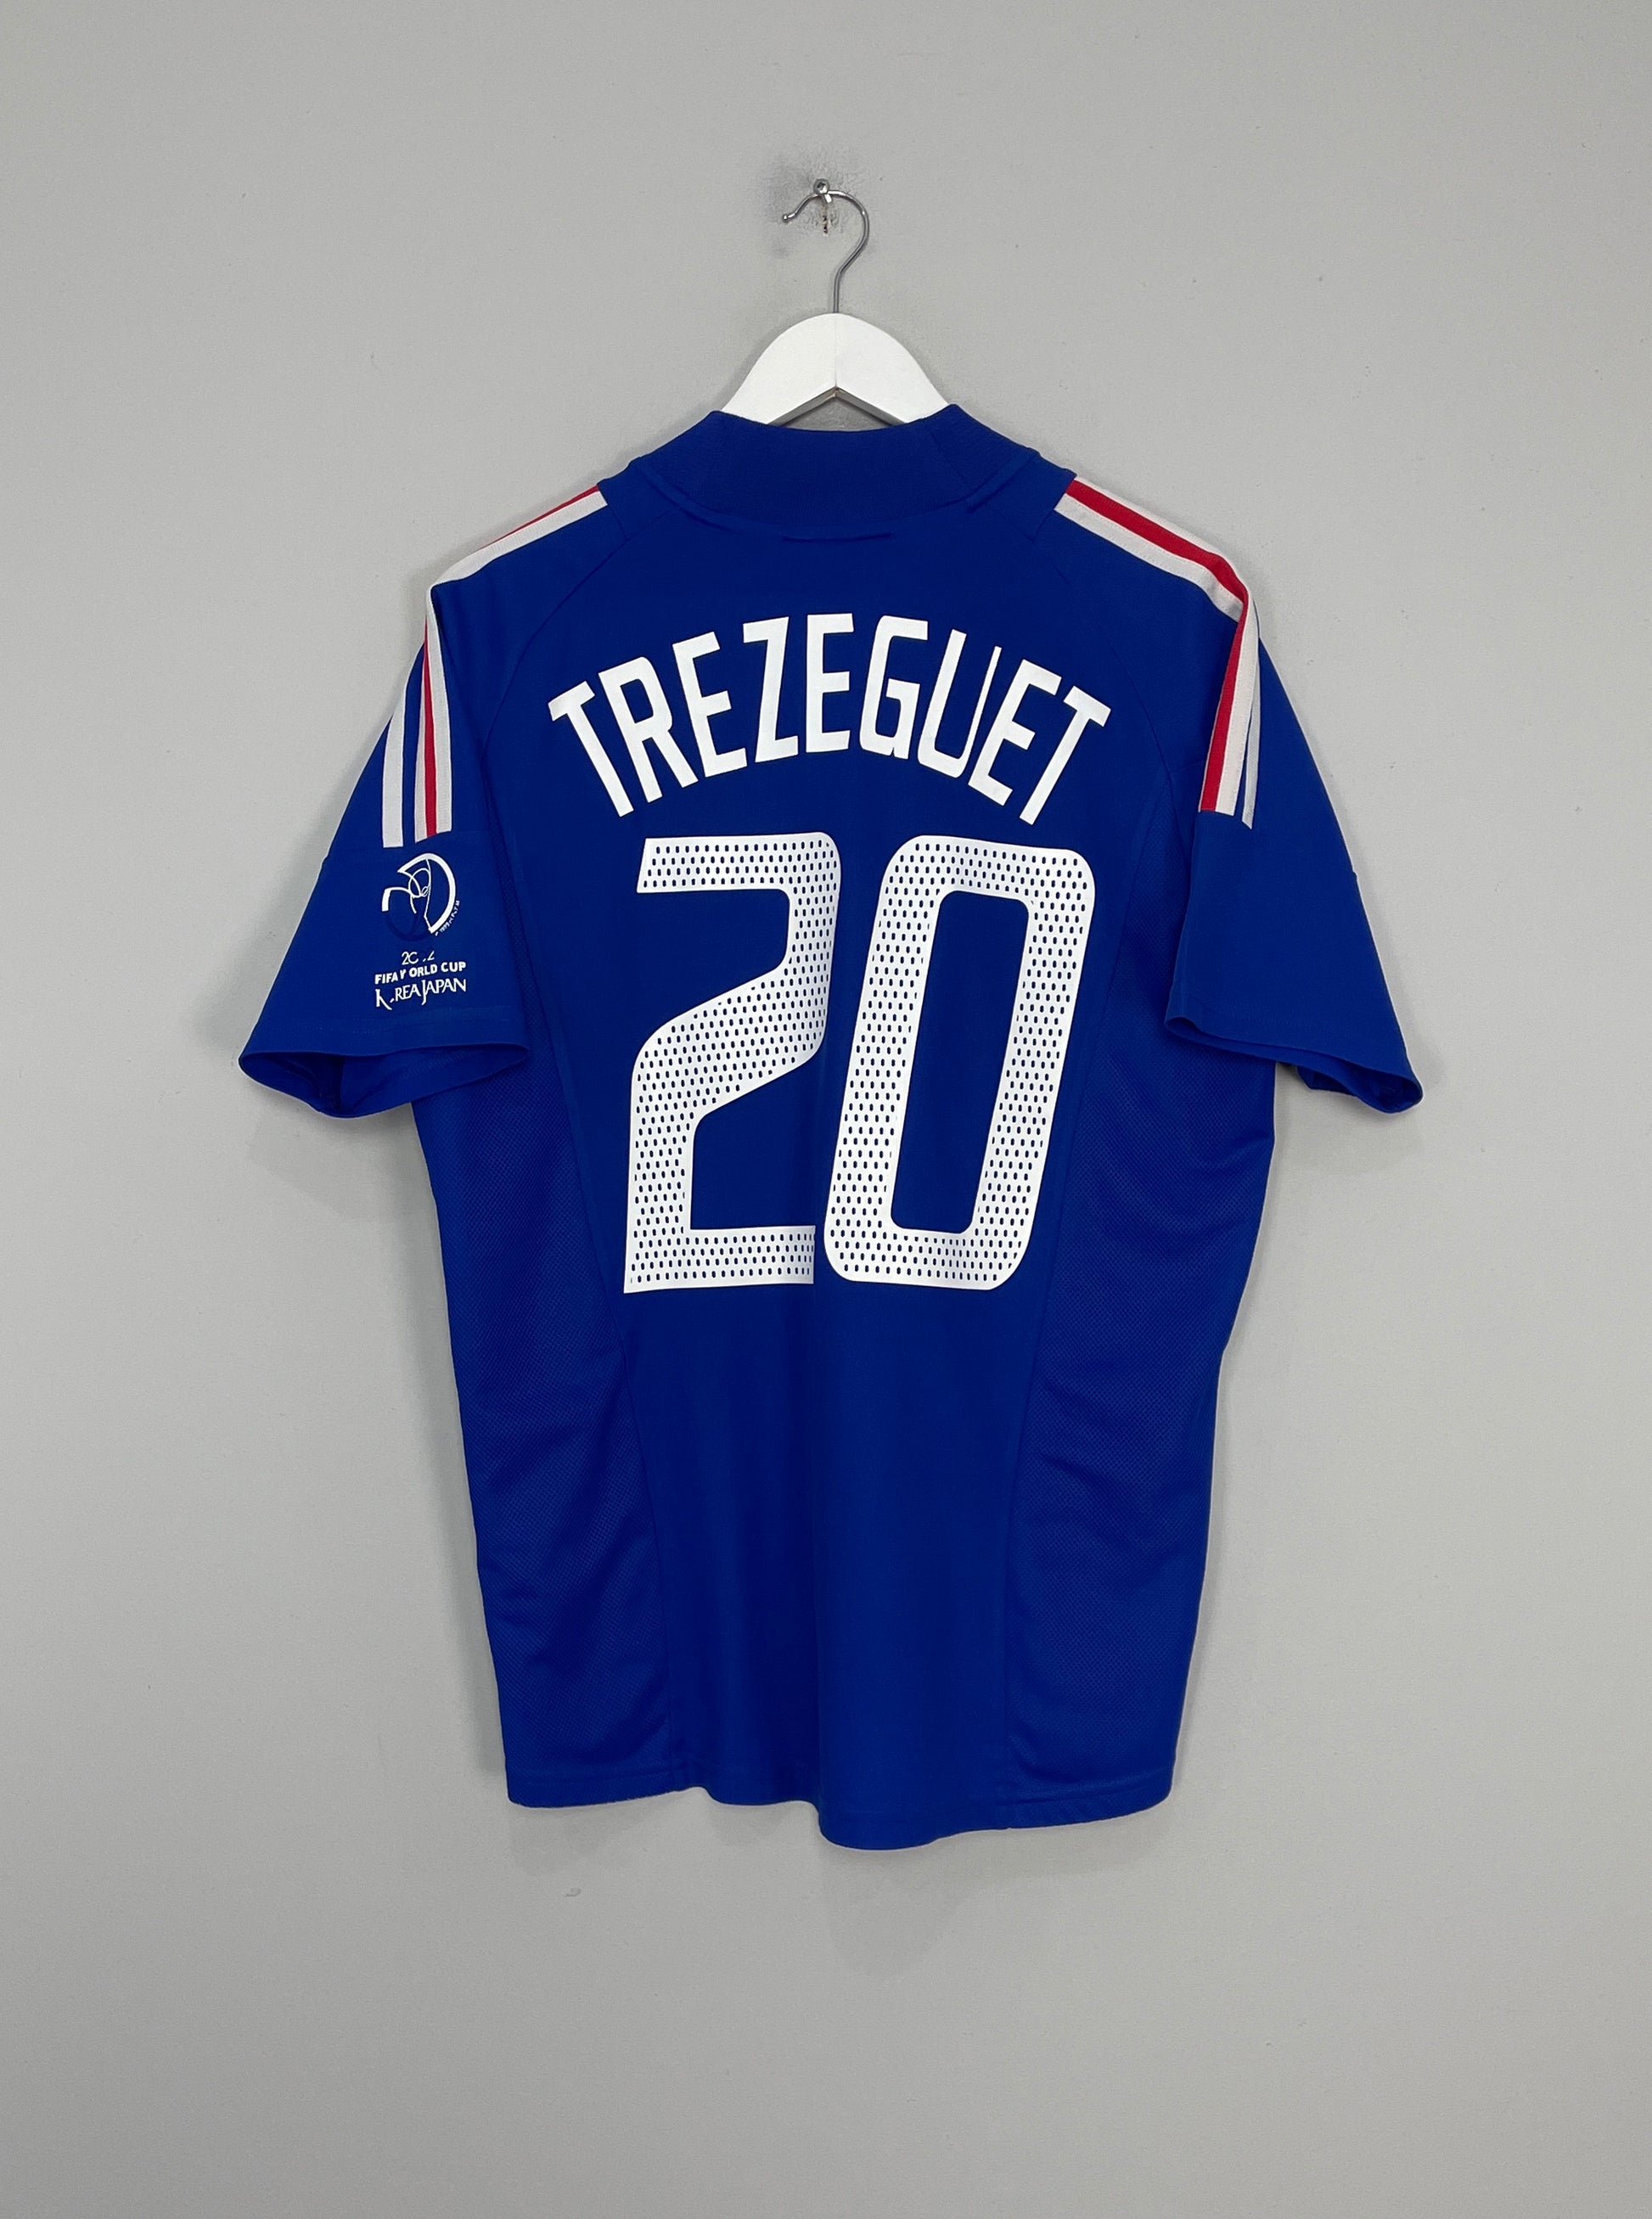 Image of the France Trezeguet shirt from the 2002/04 season